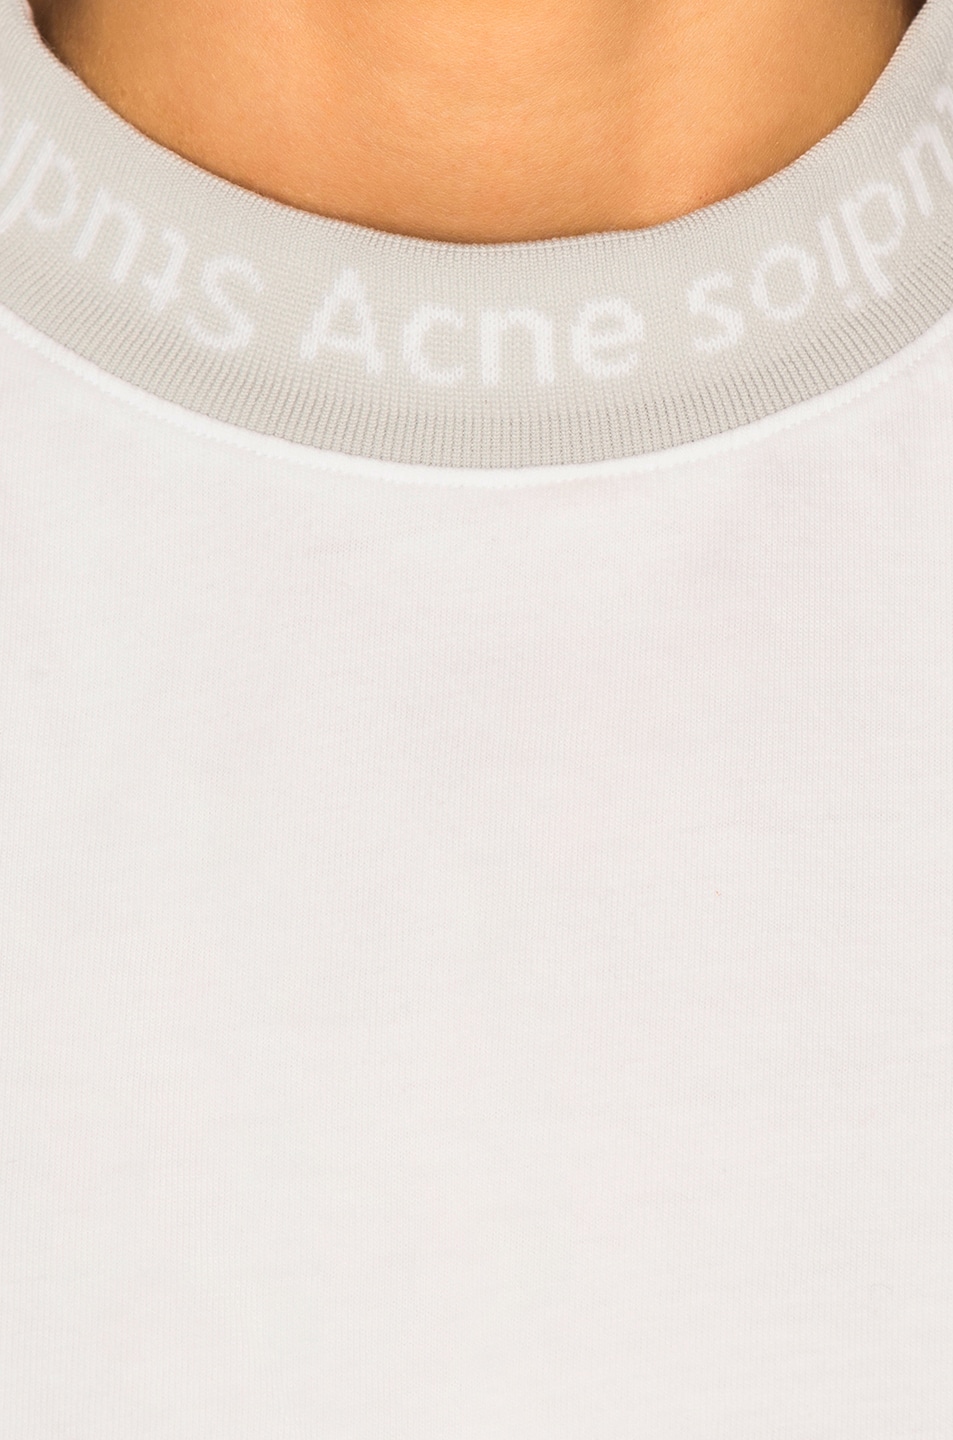 Acne Studios Gojina Tee in Optic White | FWRD